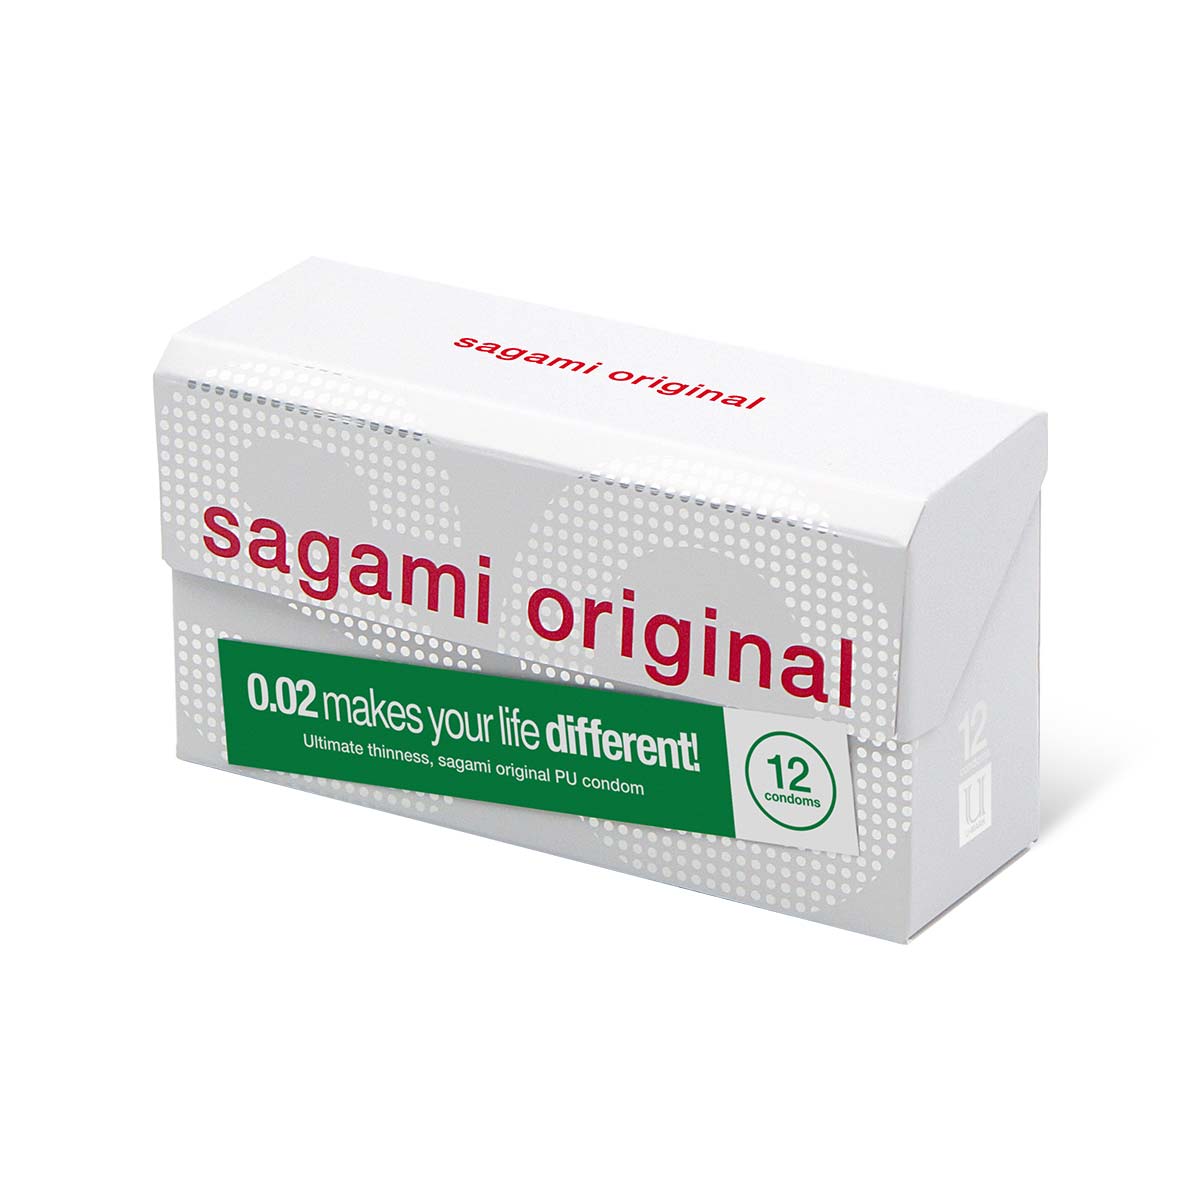 Sagami Original 0.02 (2nd generation) 12's Pack PU Condom (UK)-thumb